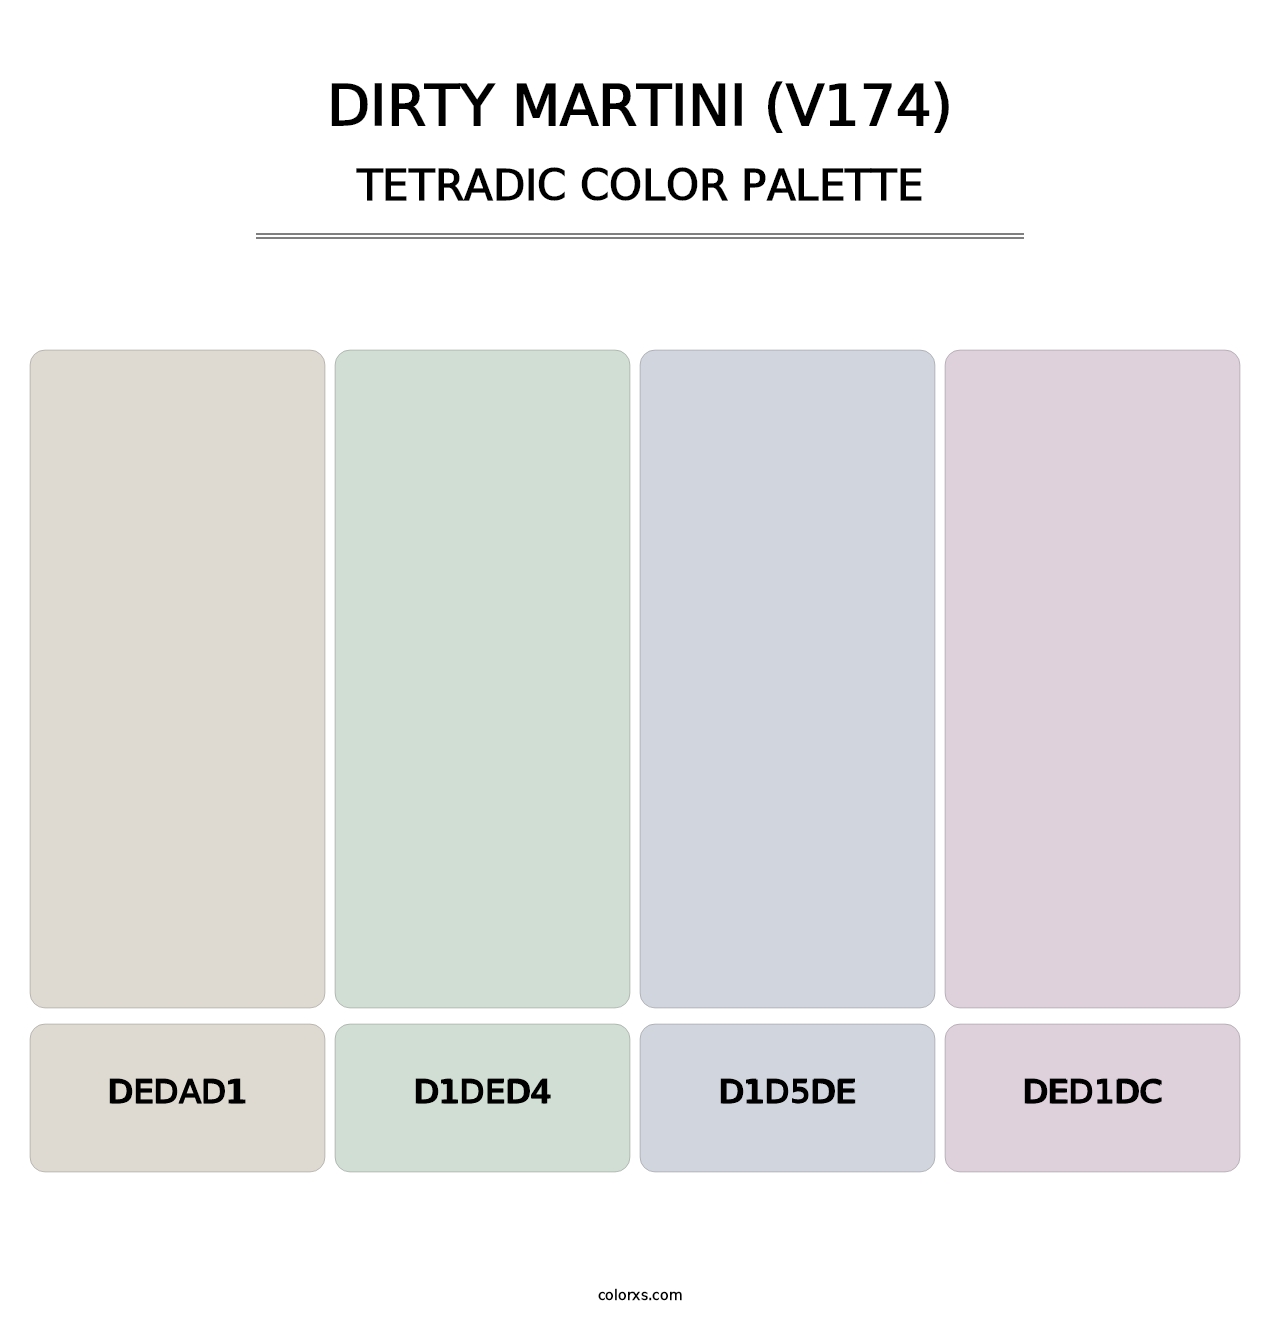 Dirty Martini (V174) - Tetradic Color Palette